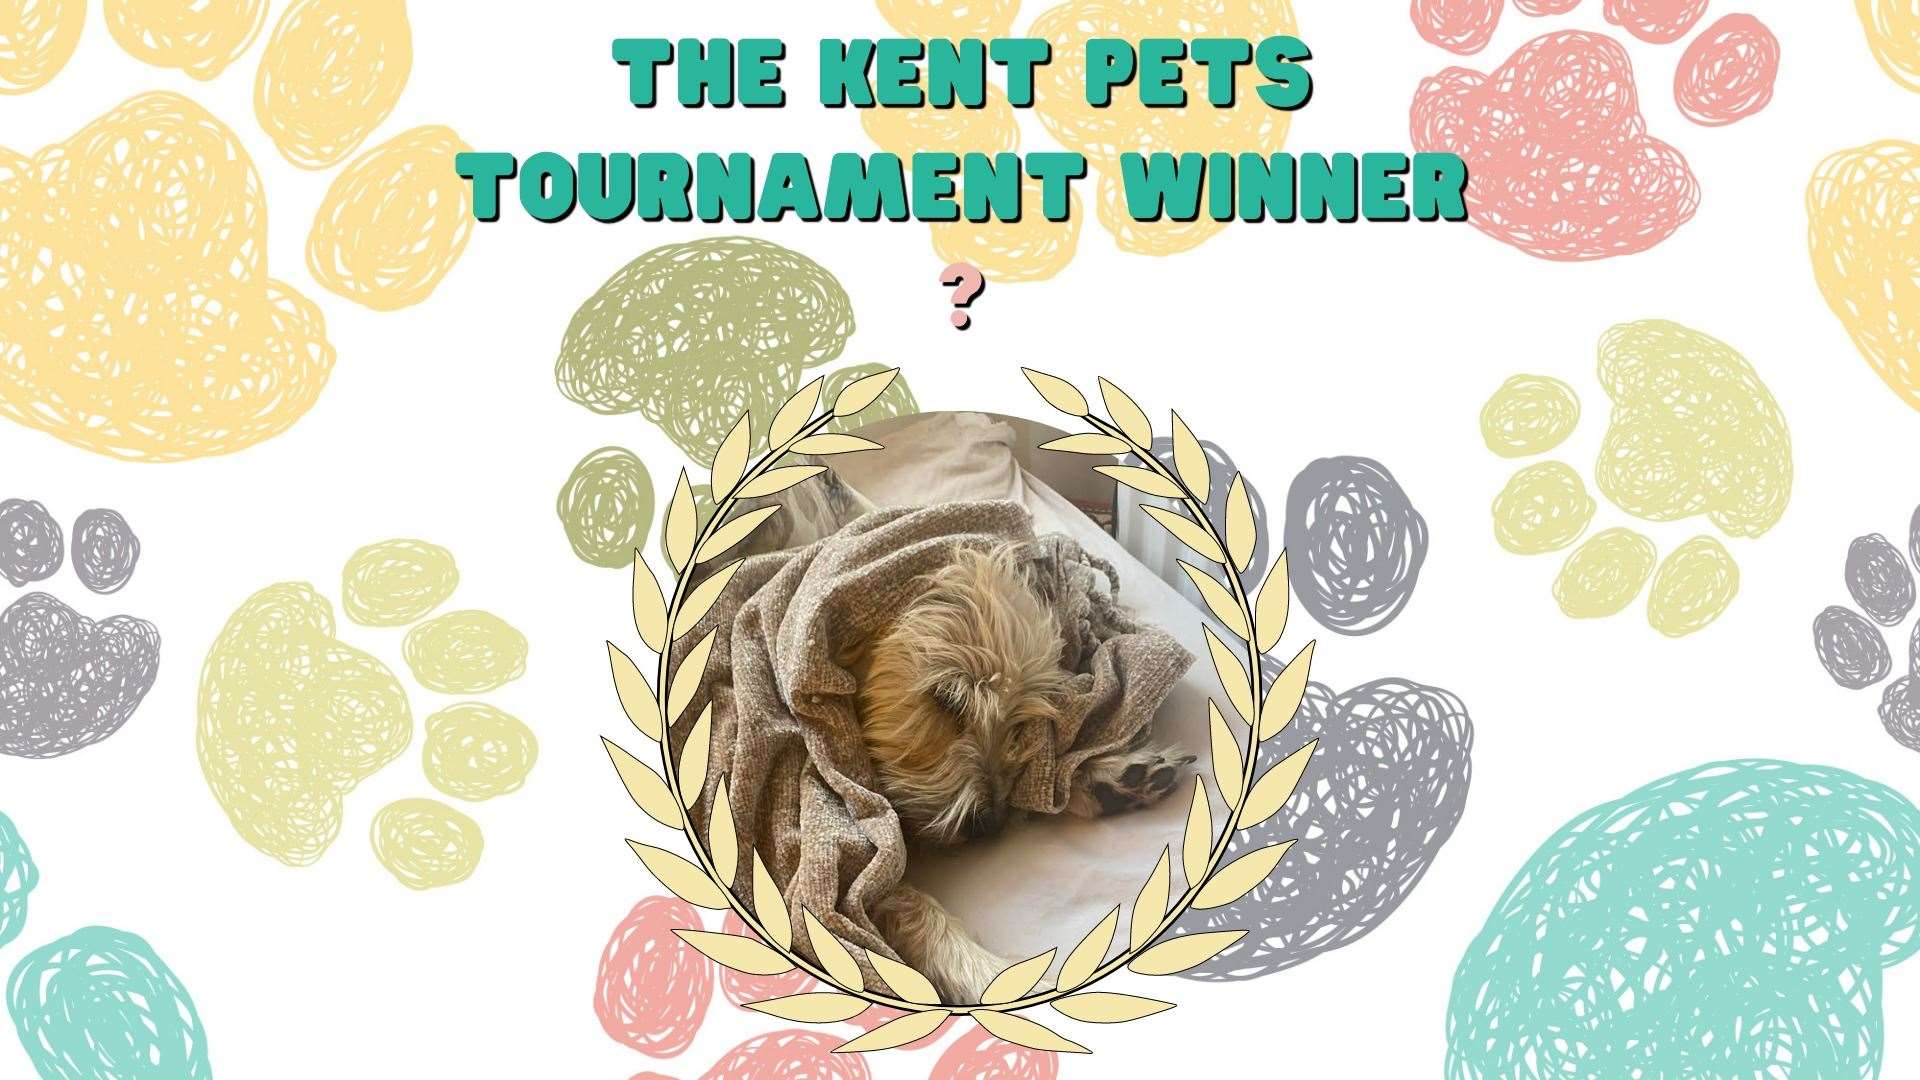 Mona the lurcher cross Shih Tzu has won October's Kent Pets Tournament